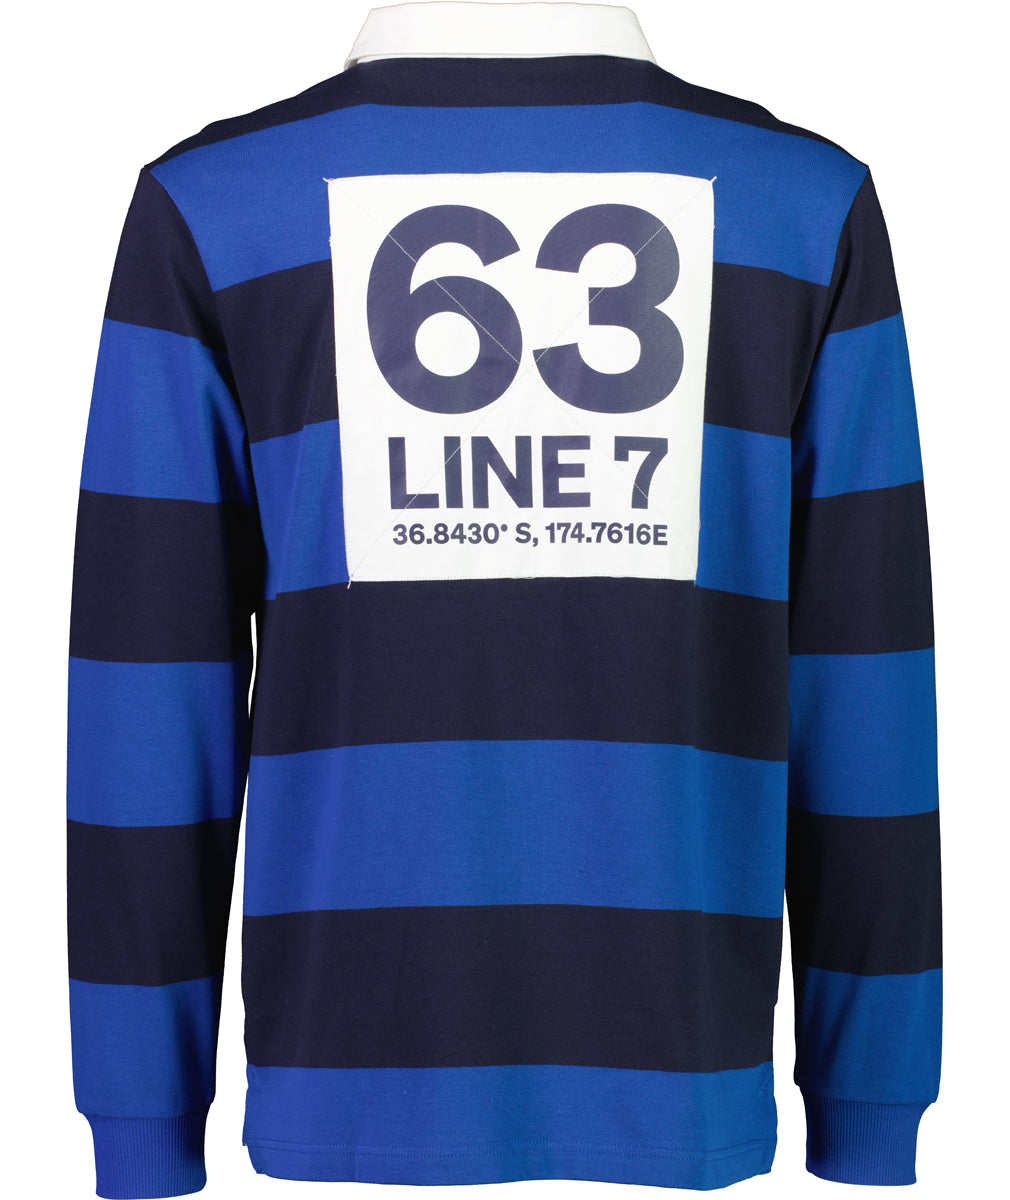 line-7-men-s-range-cotton-rugby-top_2.jpg